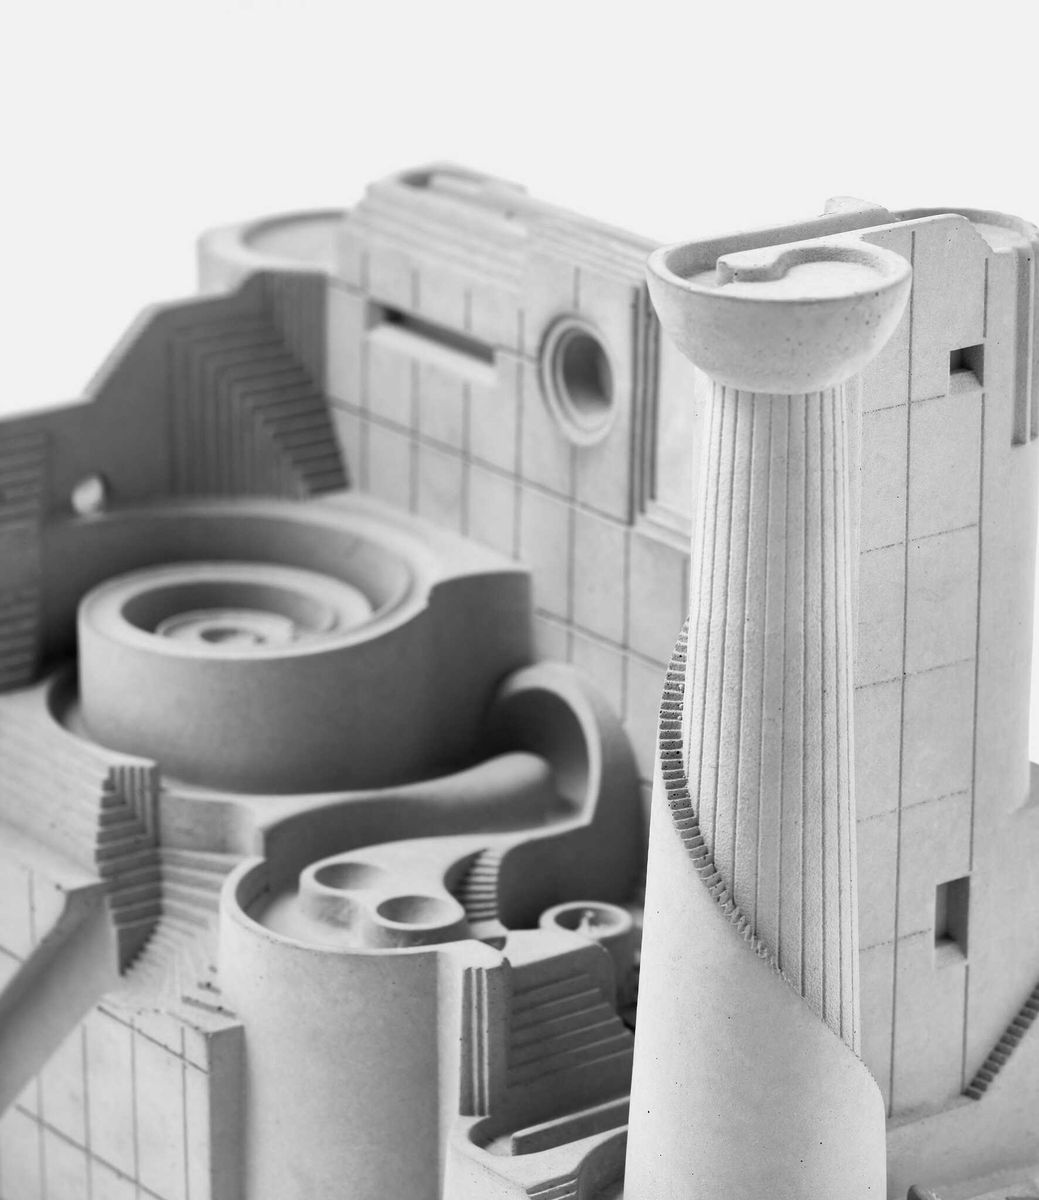 Material Immaterial The Factory — кинетическая скульптура из бетона